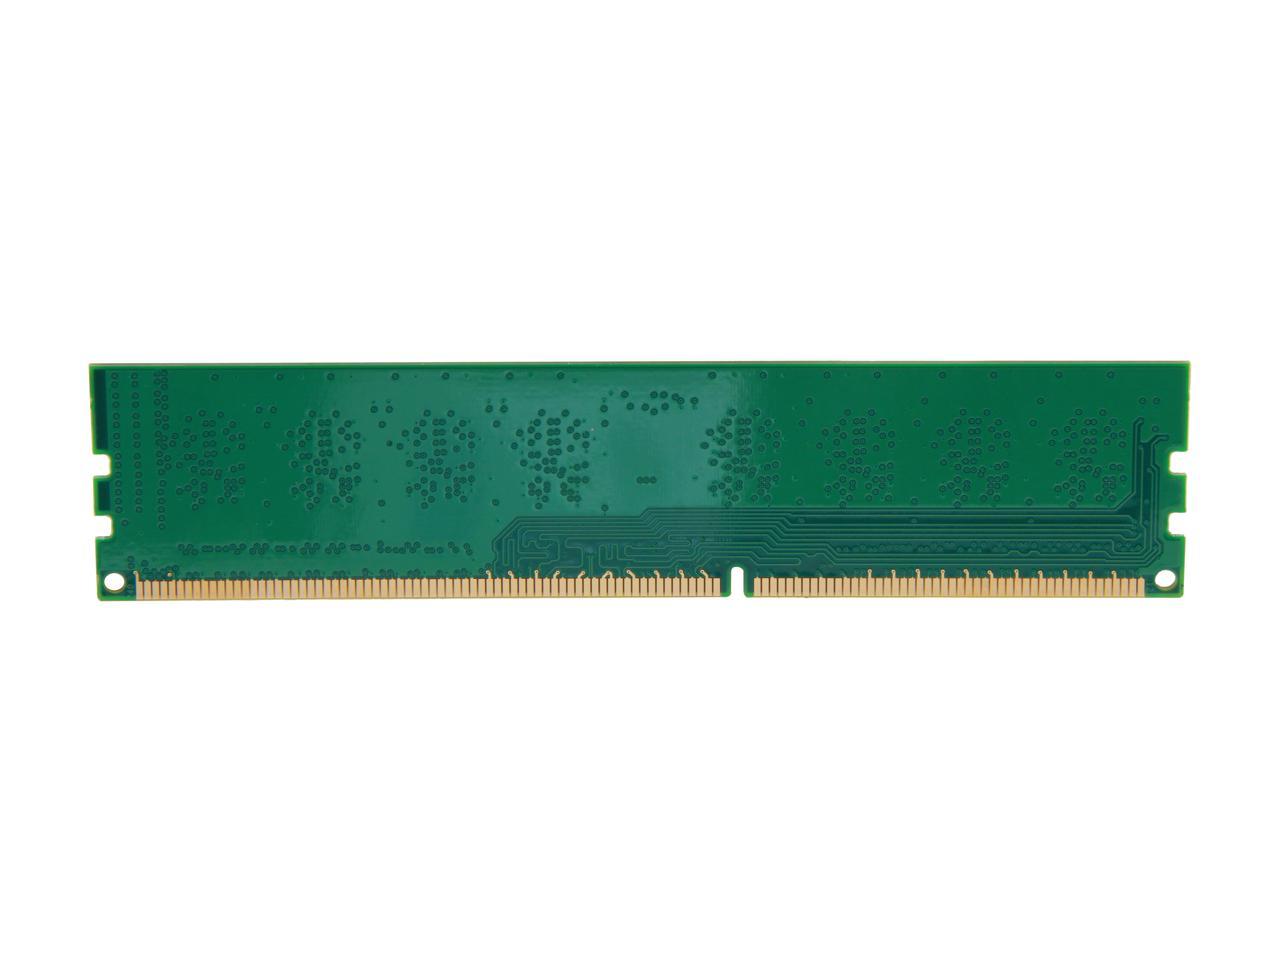 Kingston 4GB 240-Pin DDR3 SDRAM DDR3 1333 Desktop Memory SR x8 STD Height 30mm Model KVR13N9S8H/4